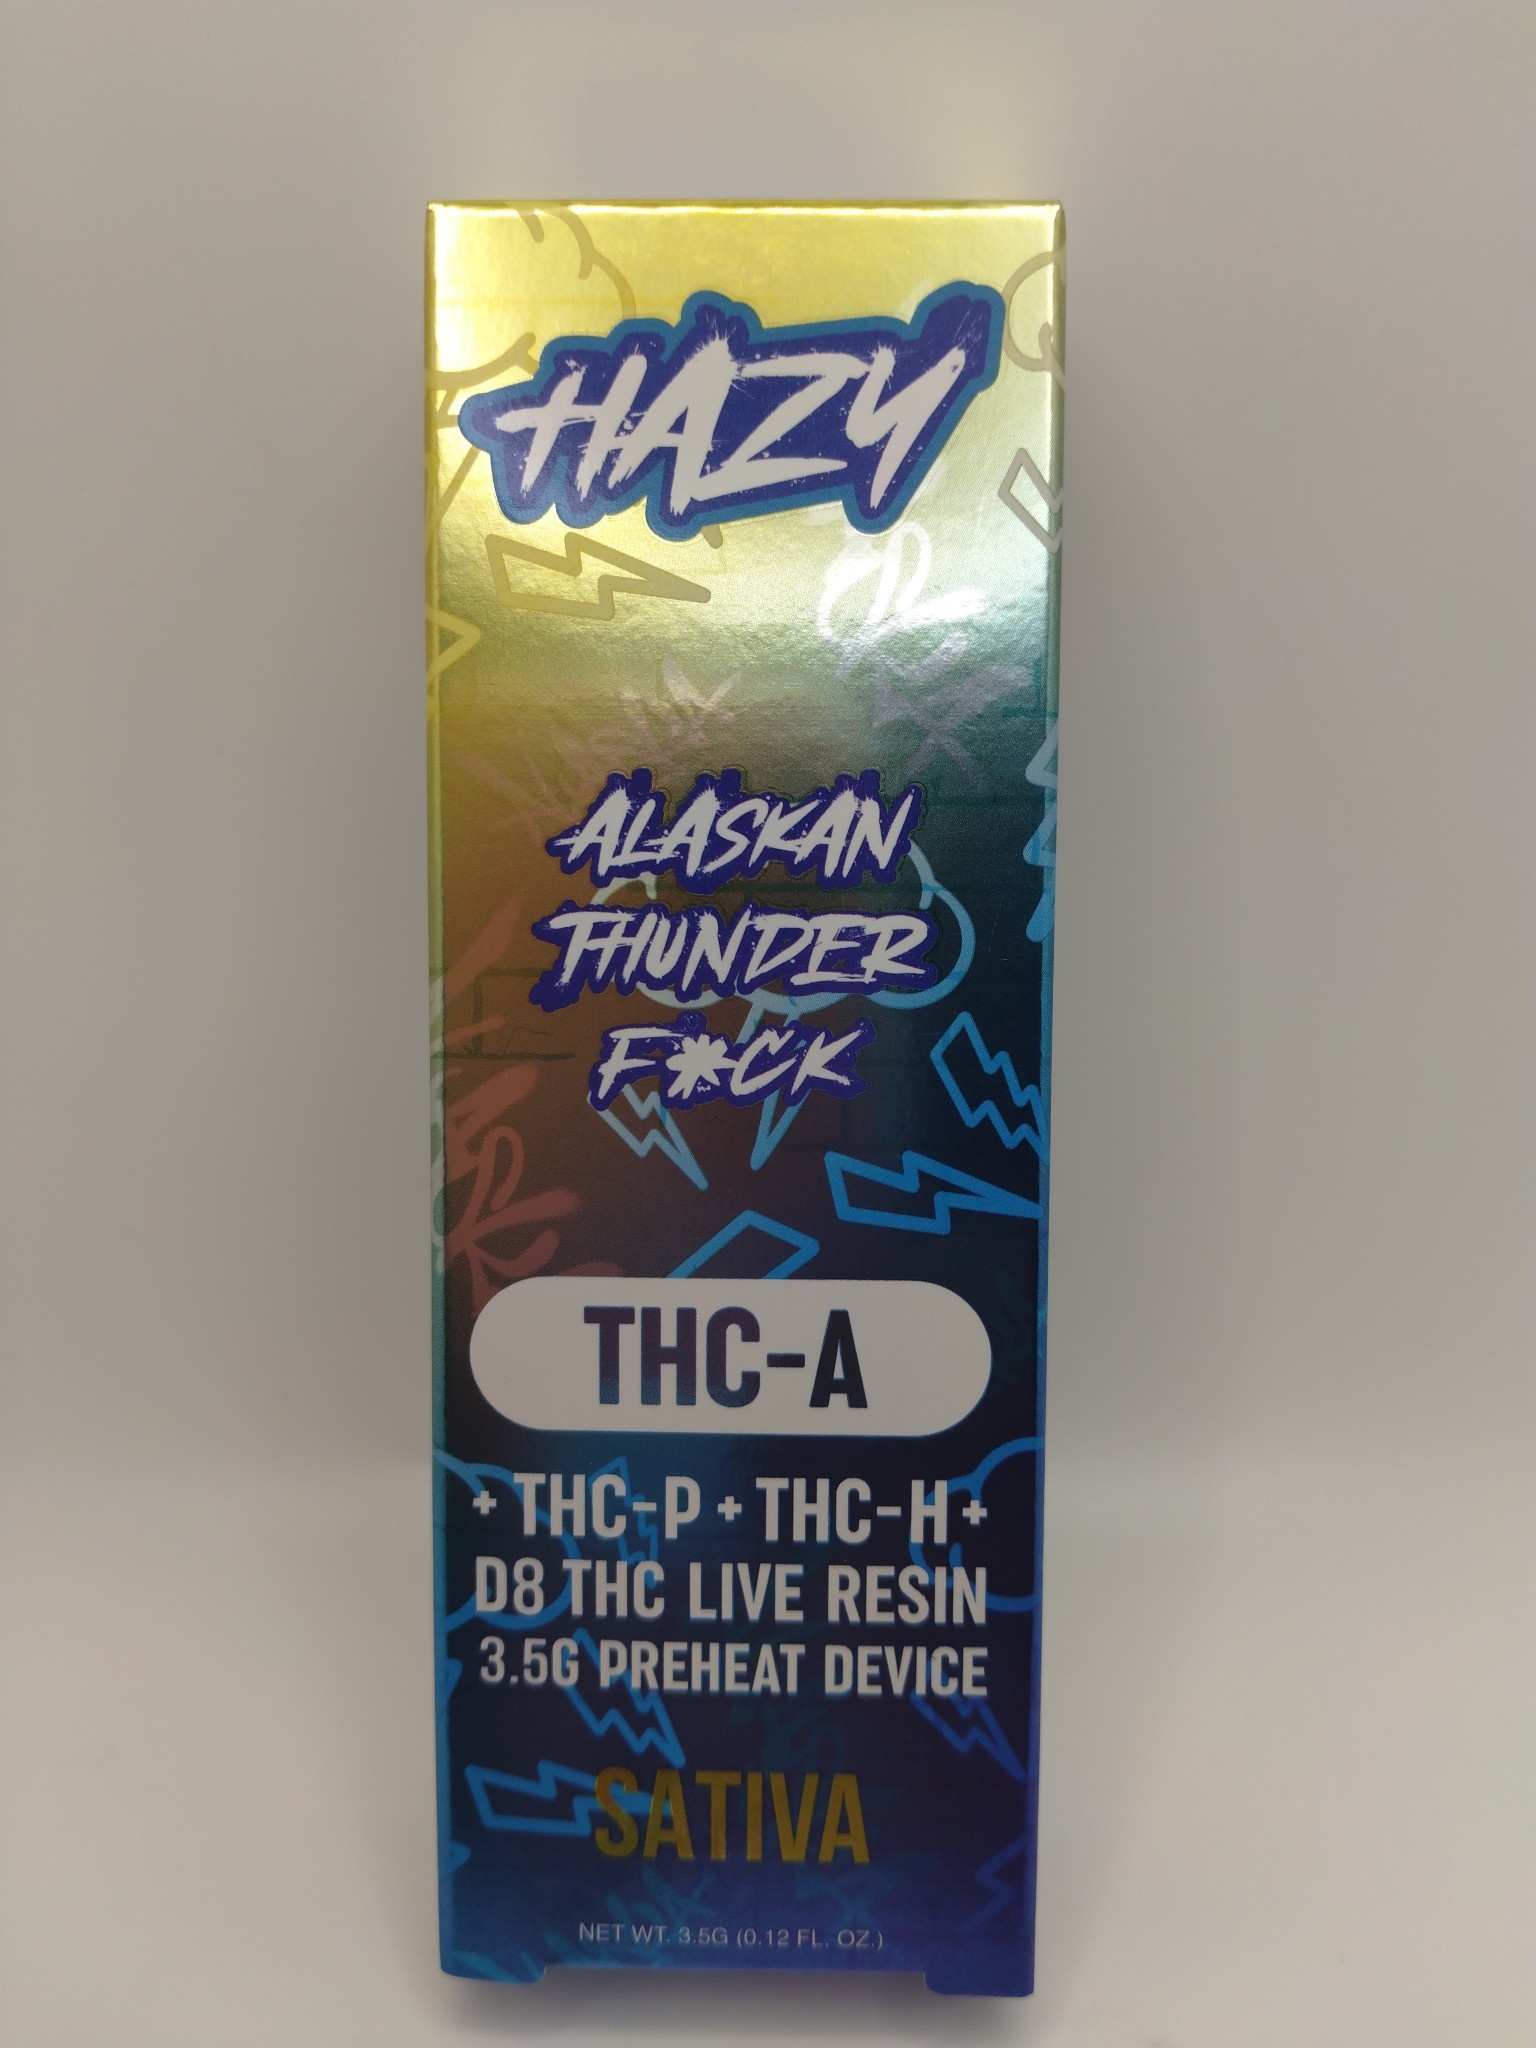 Hazy Hazy 3.5g THC-A THC-P THC-H D8 Disposable Vape - Alaskan Thunder F*ck - Sativa